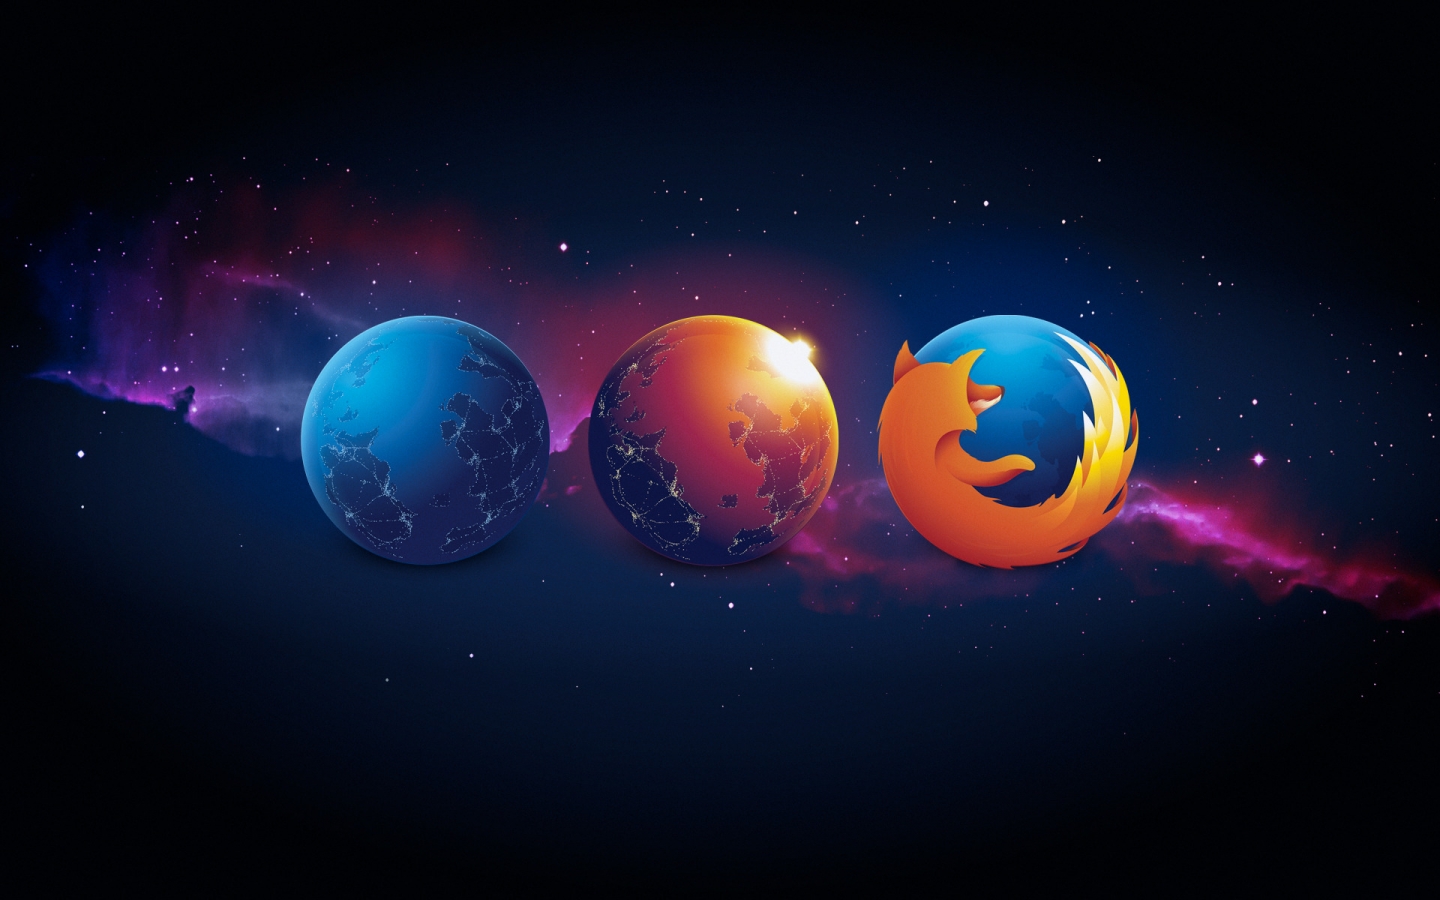 Firefox Nightly Aurora for 1440 x 900 widescreen resolution